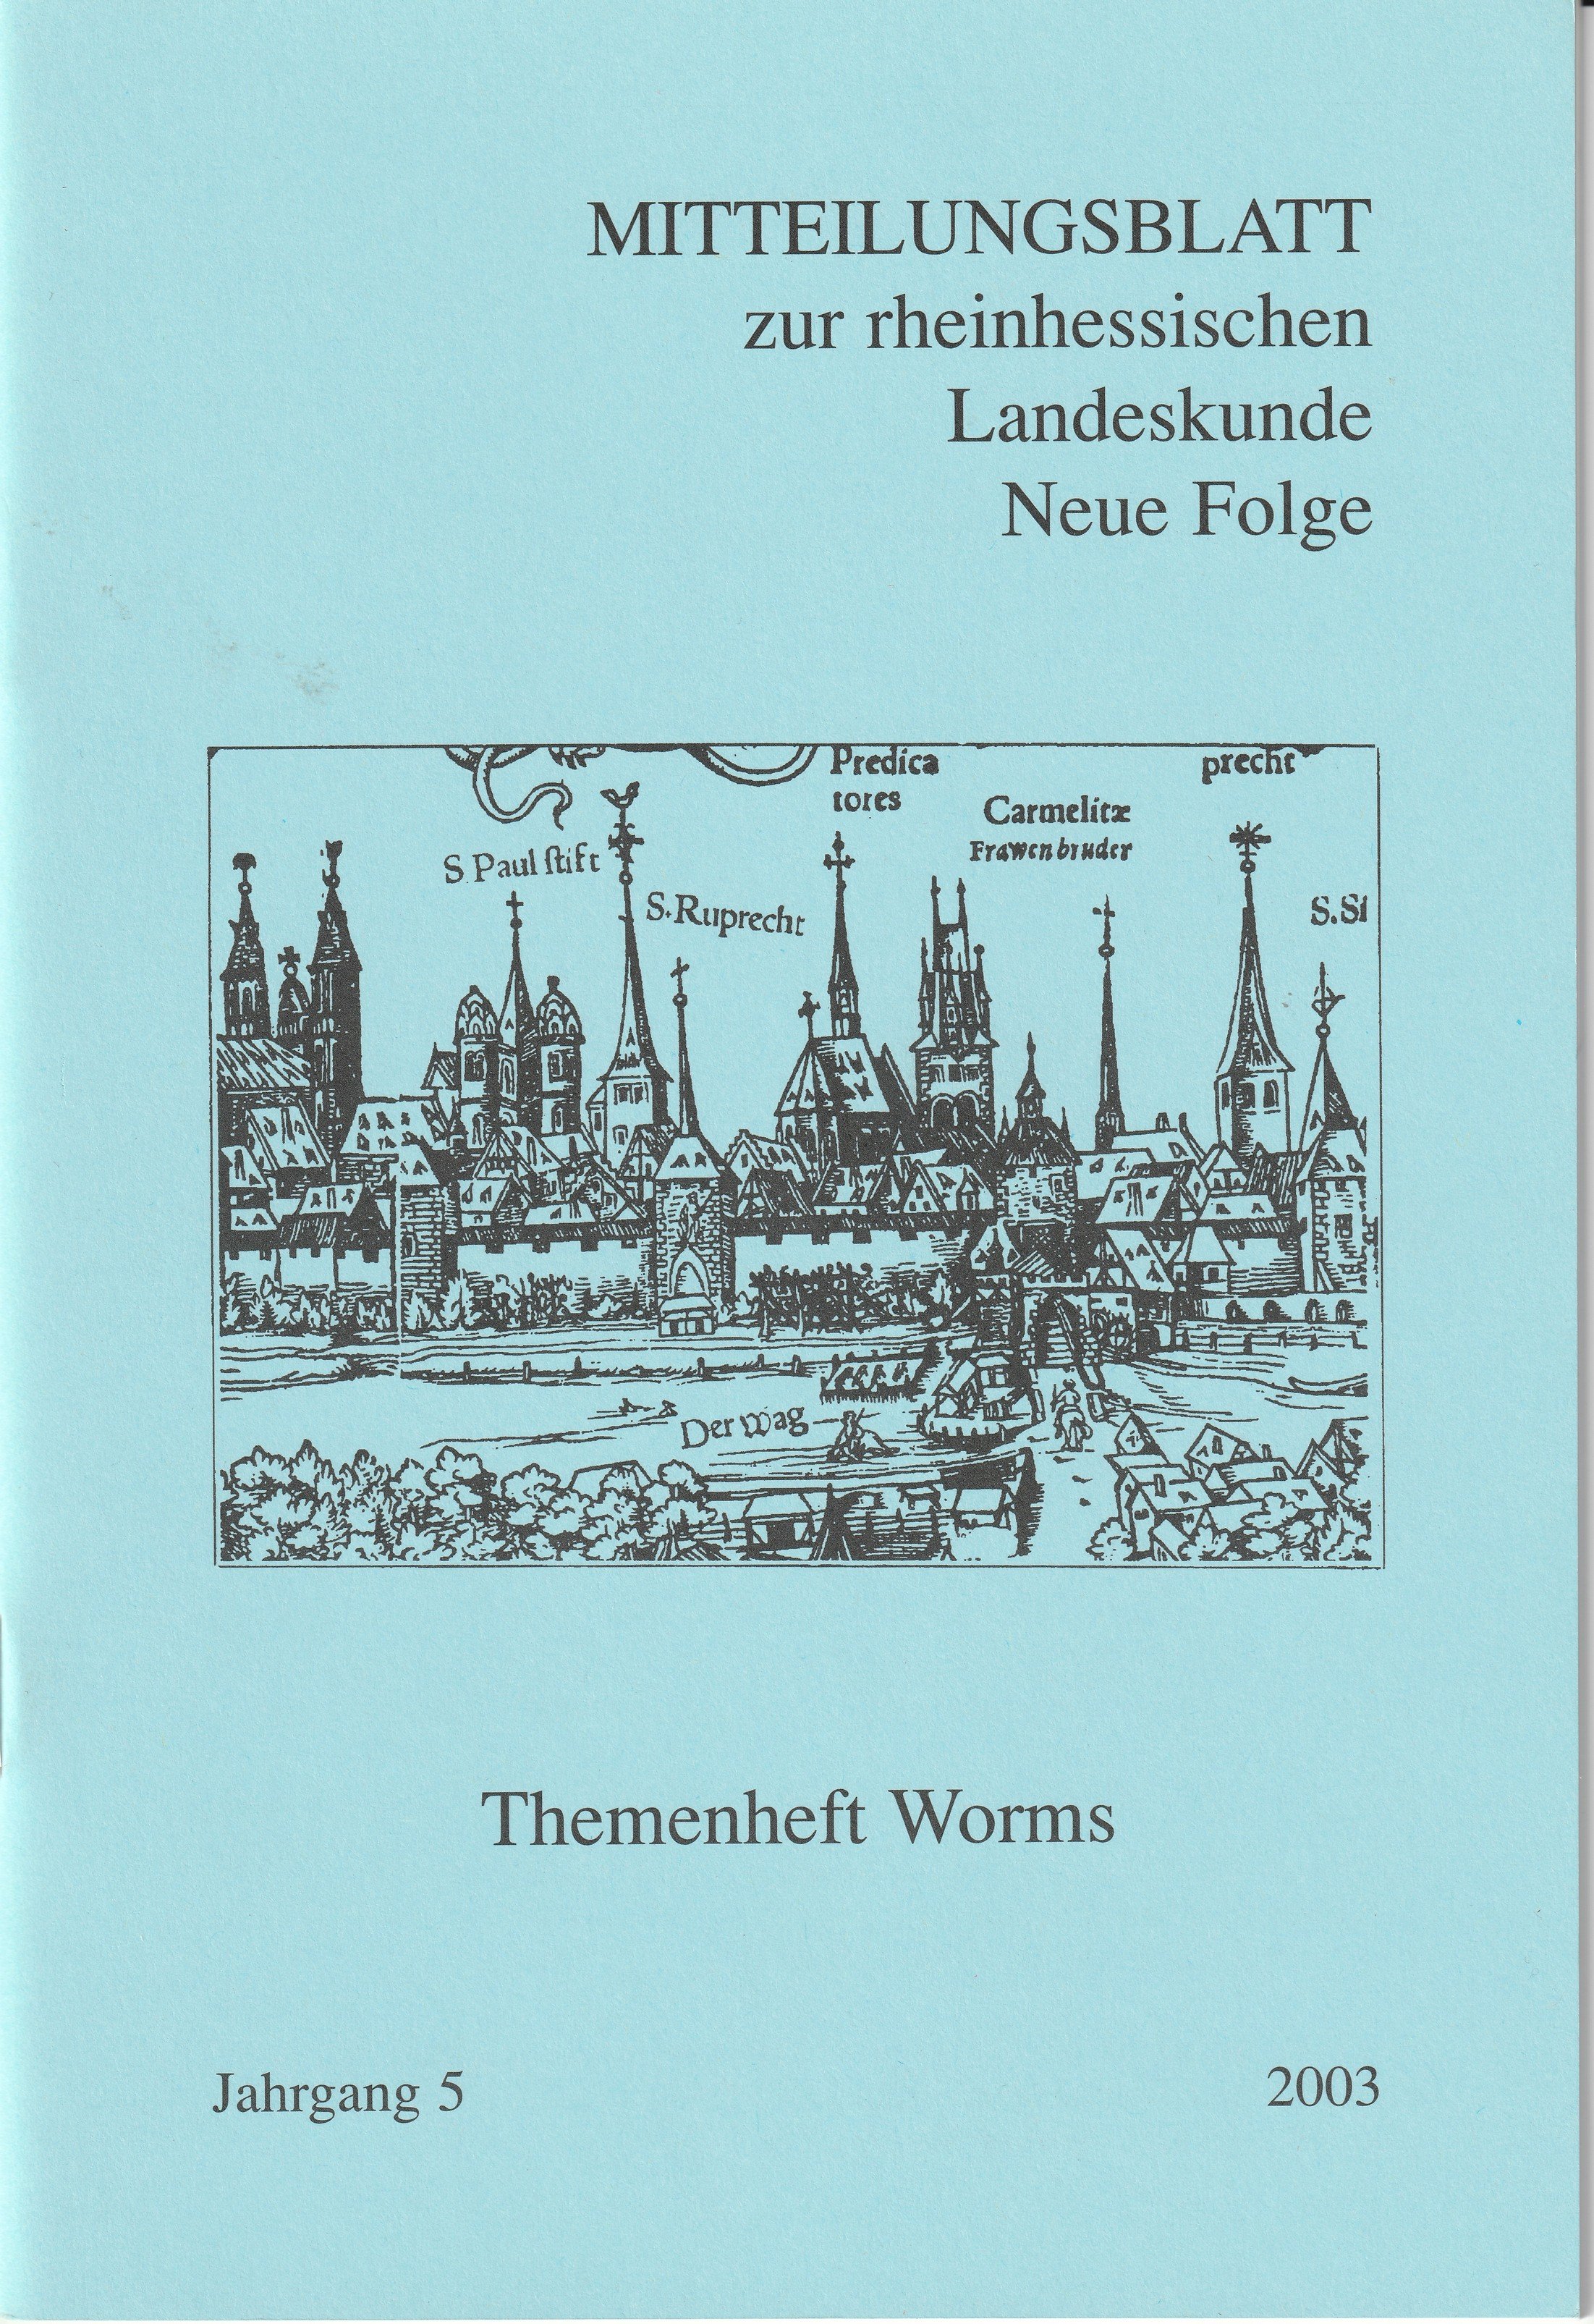 Themenheft Worms (Museum Guntersblum CC BY-NC-SA)